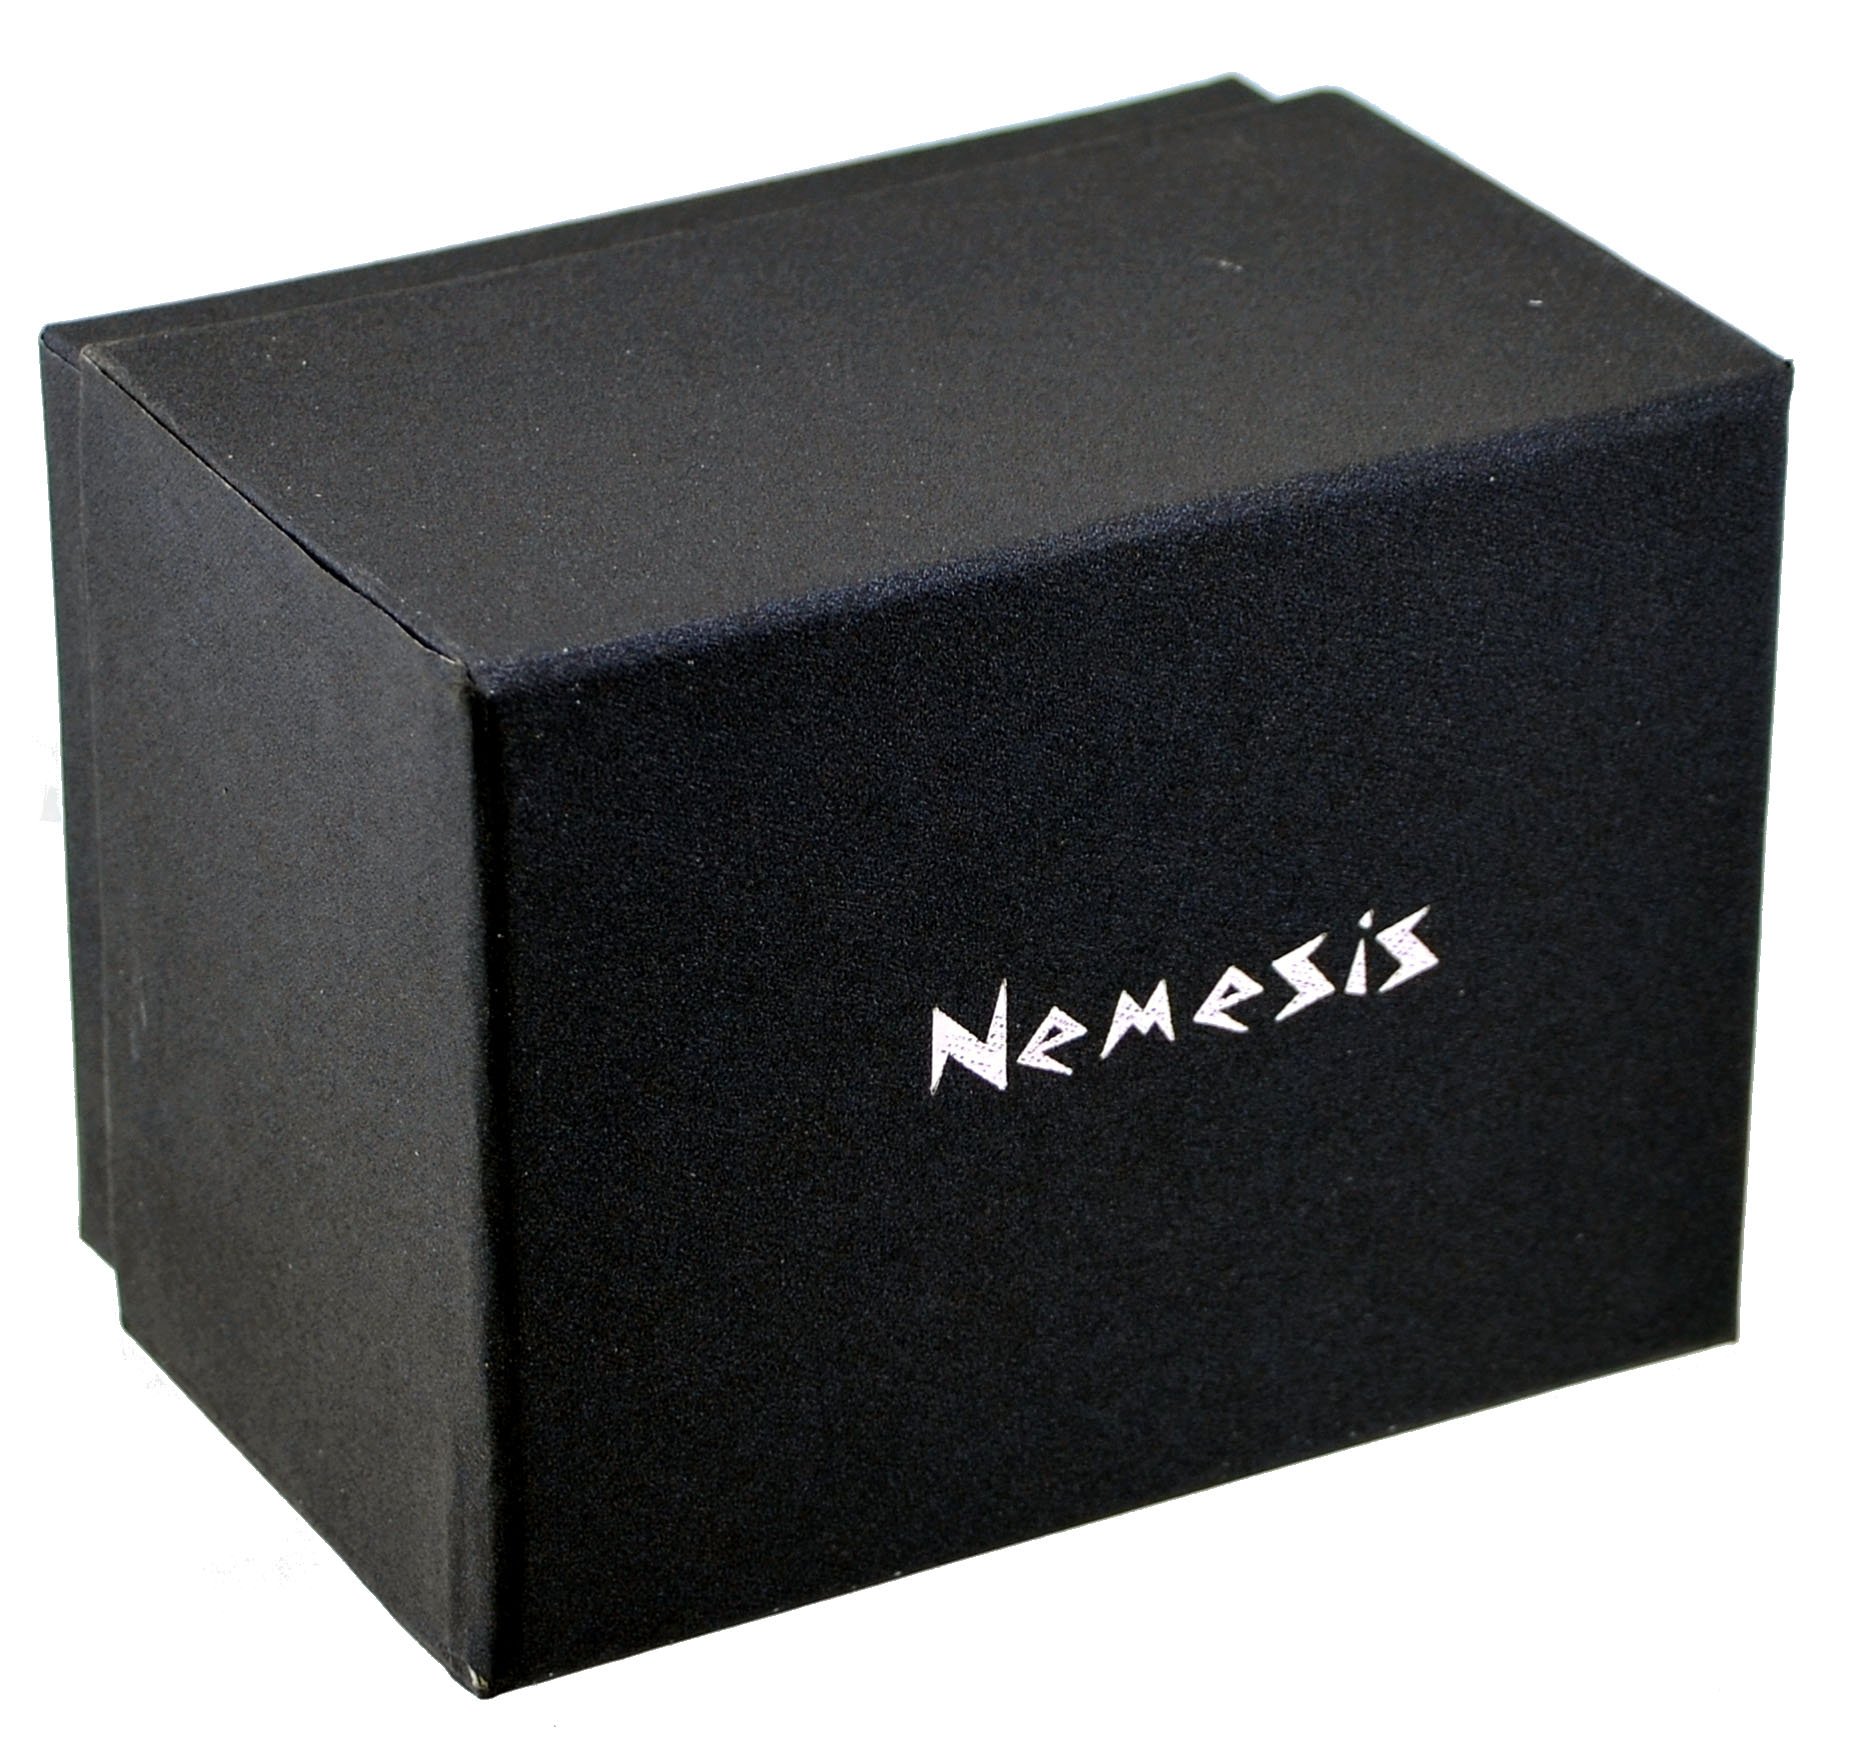 Nemesis Unisex 091KDTB Elegant Gradient Design Leather Band Watch